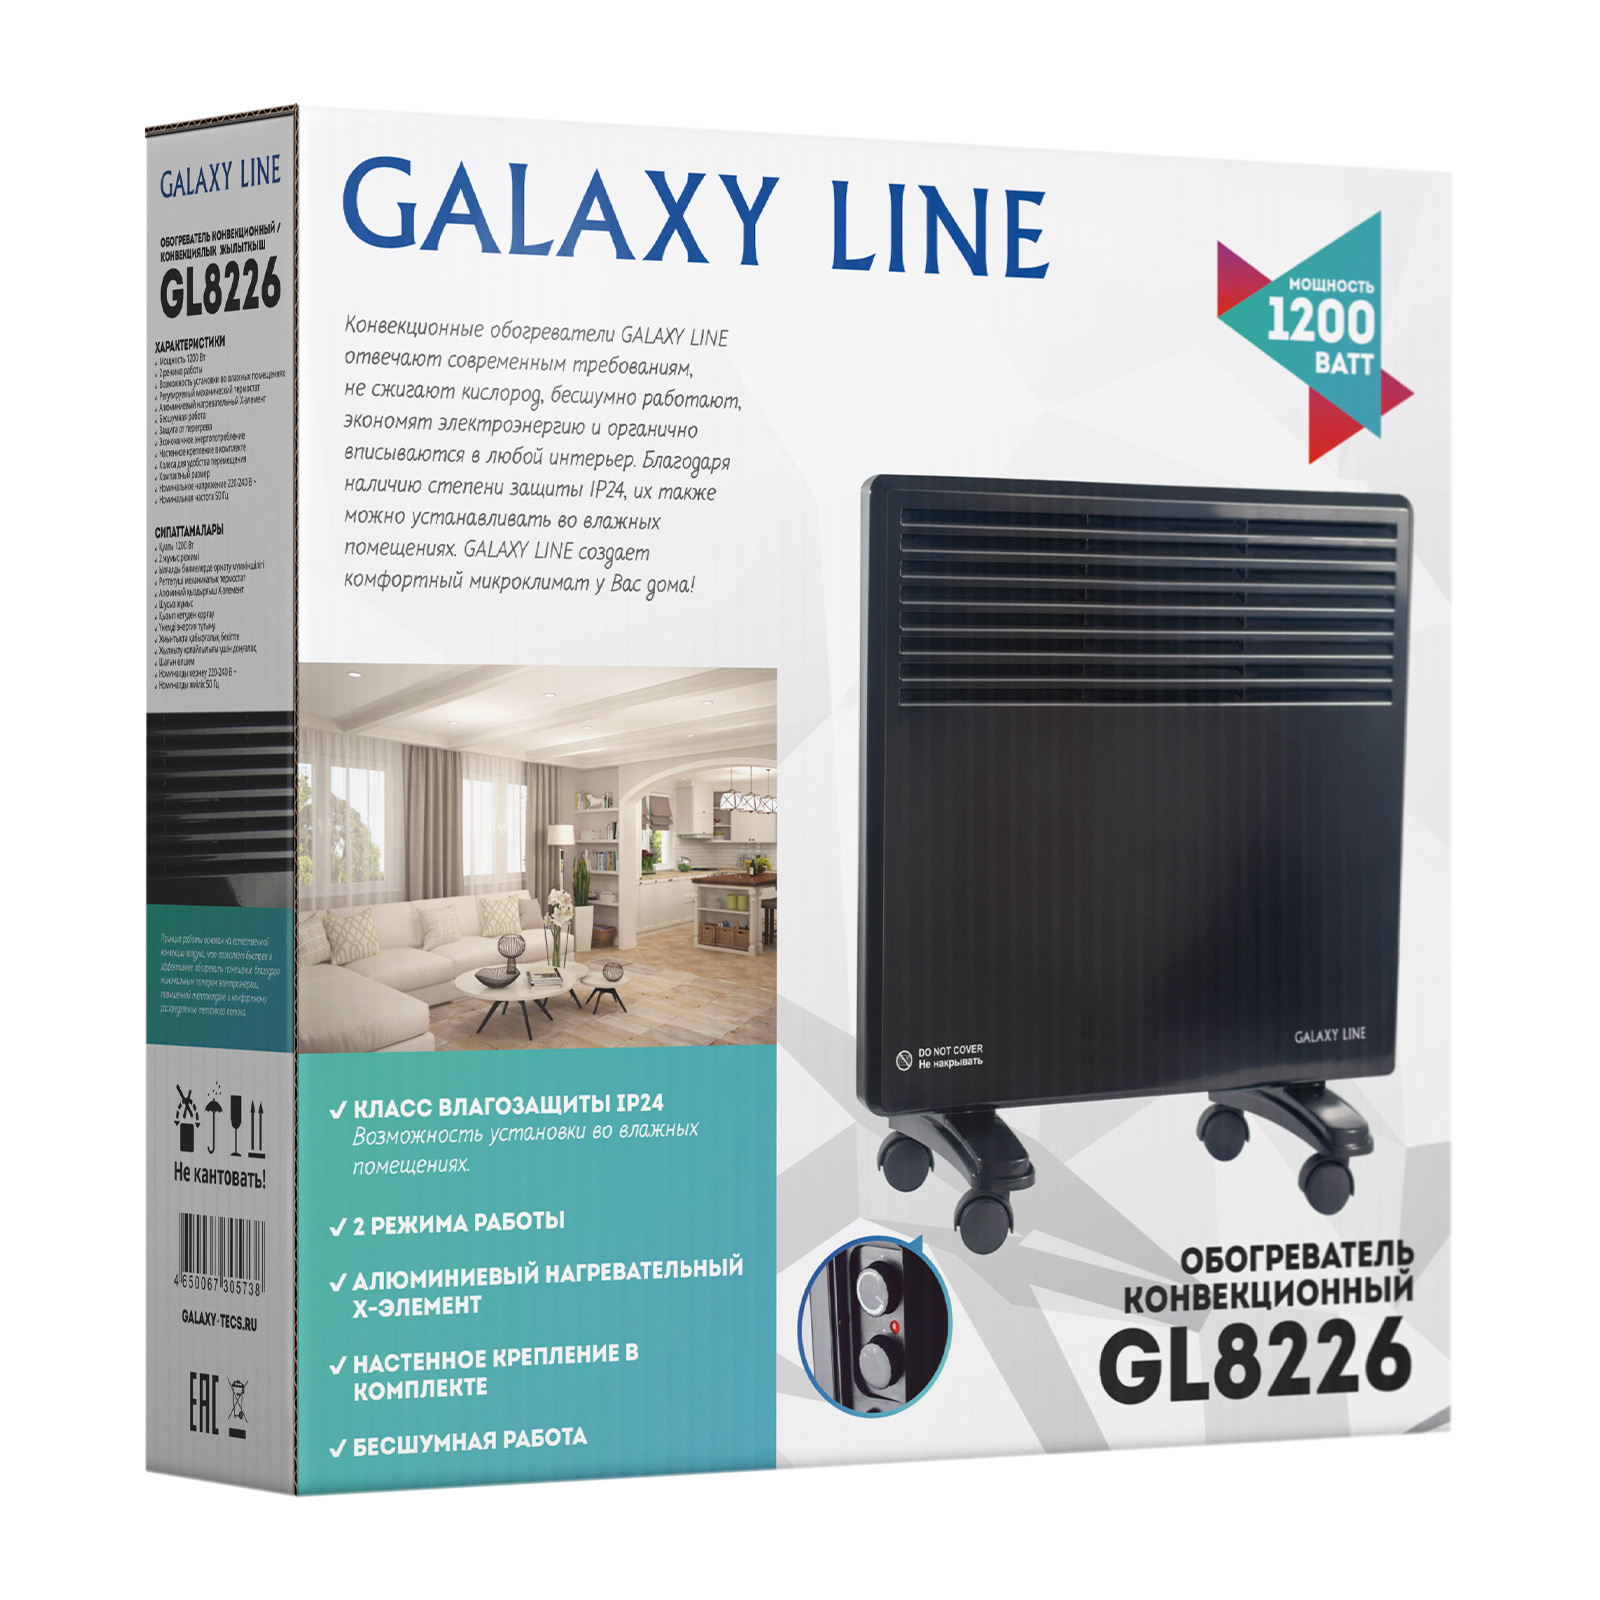  Galaxy Line GL8226 